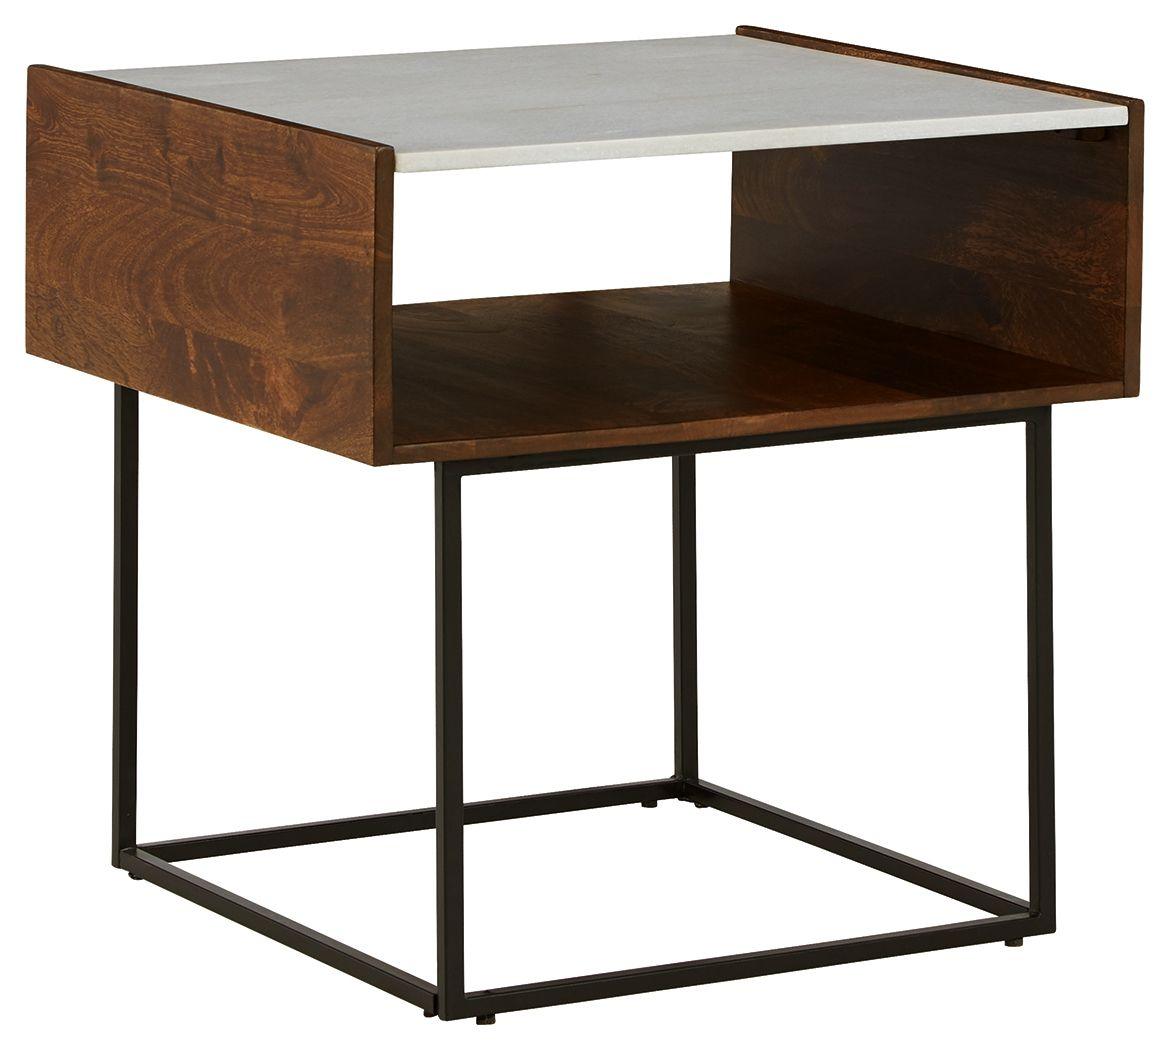 Ashley Furniture - Rusitori - Brown / Beige / White - Rectangular End Table - 5th Avenue Furniture